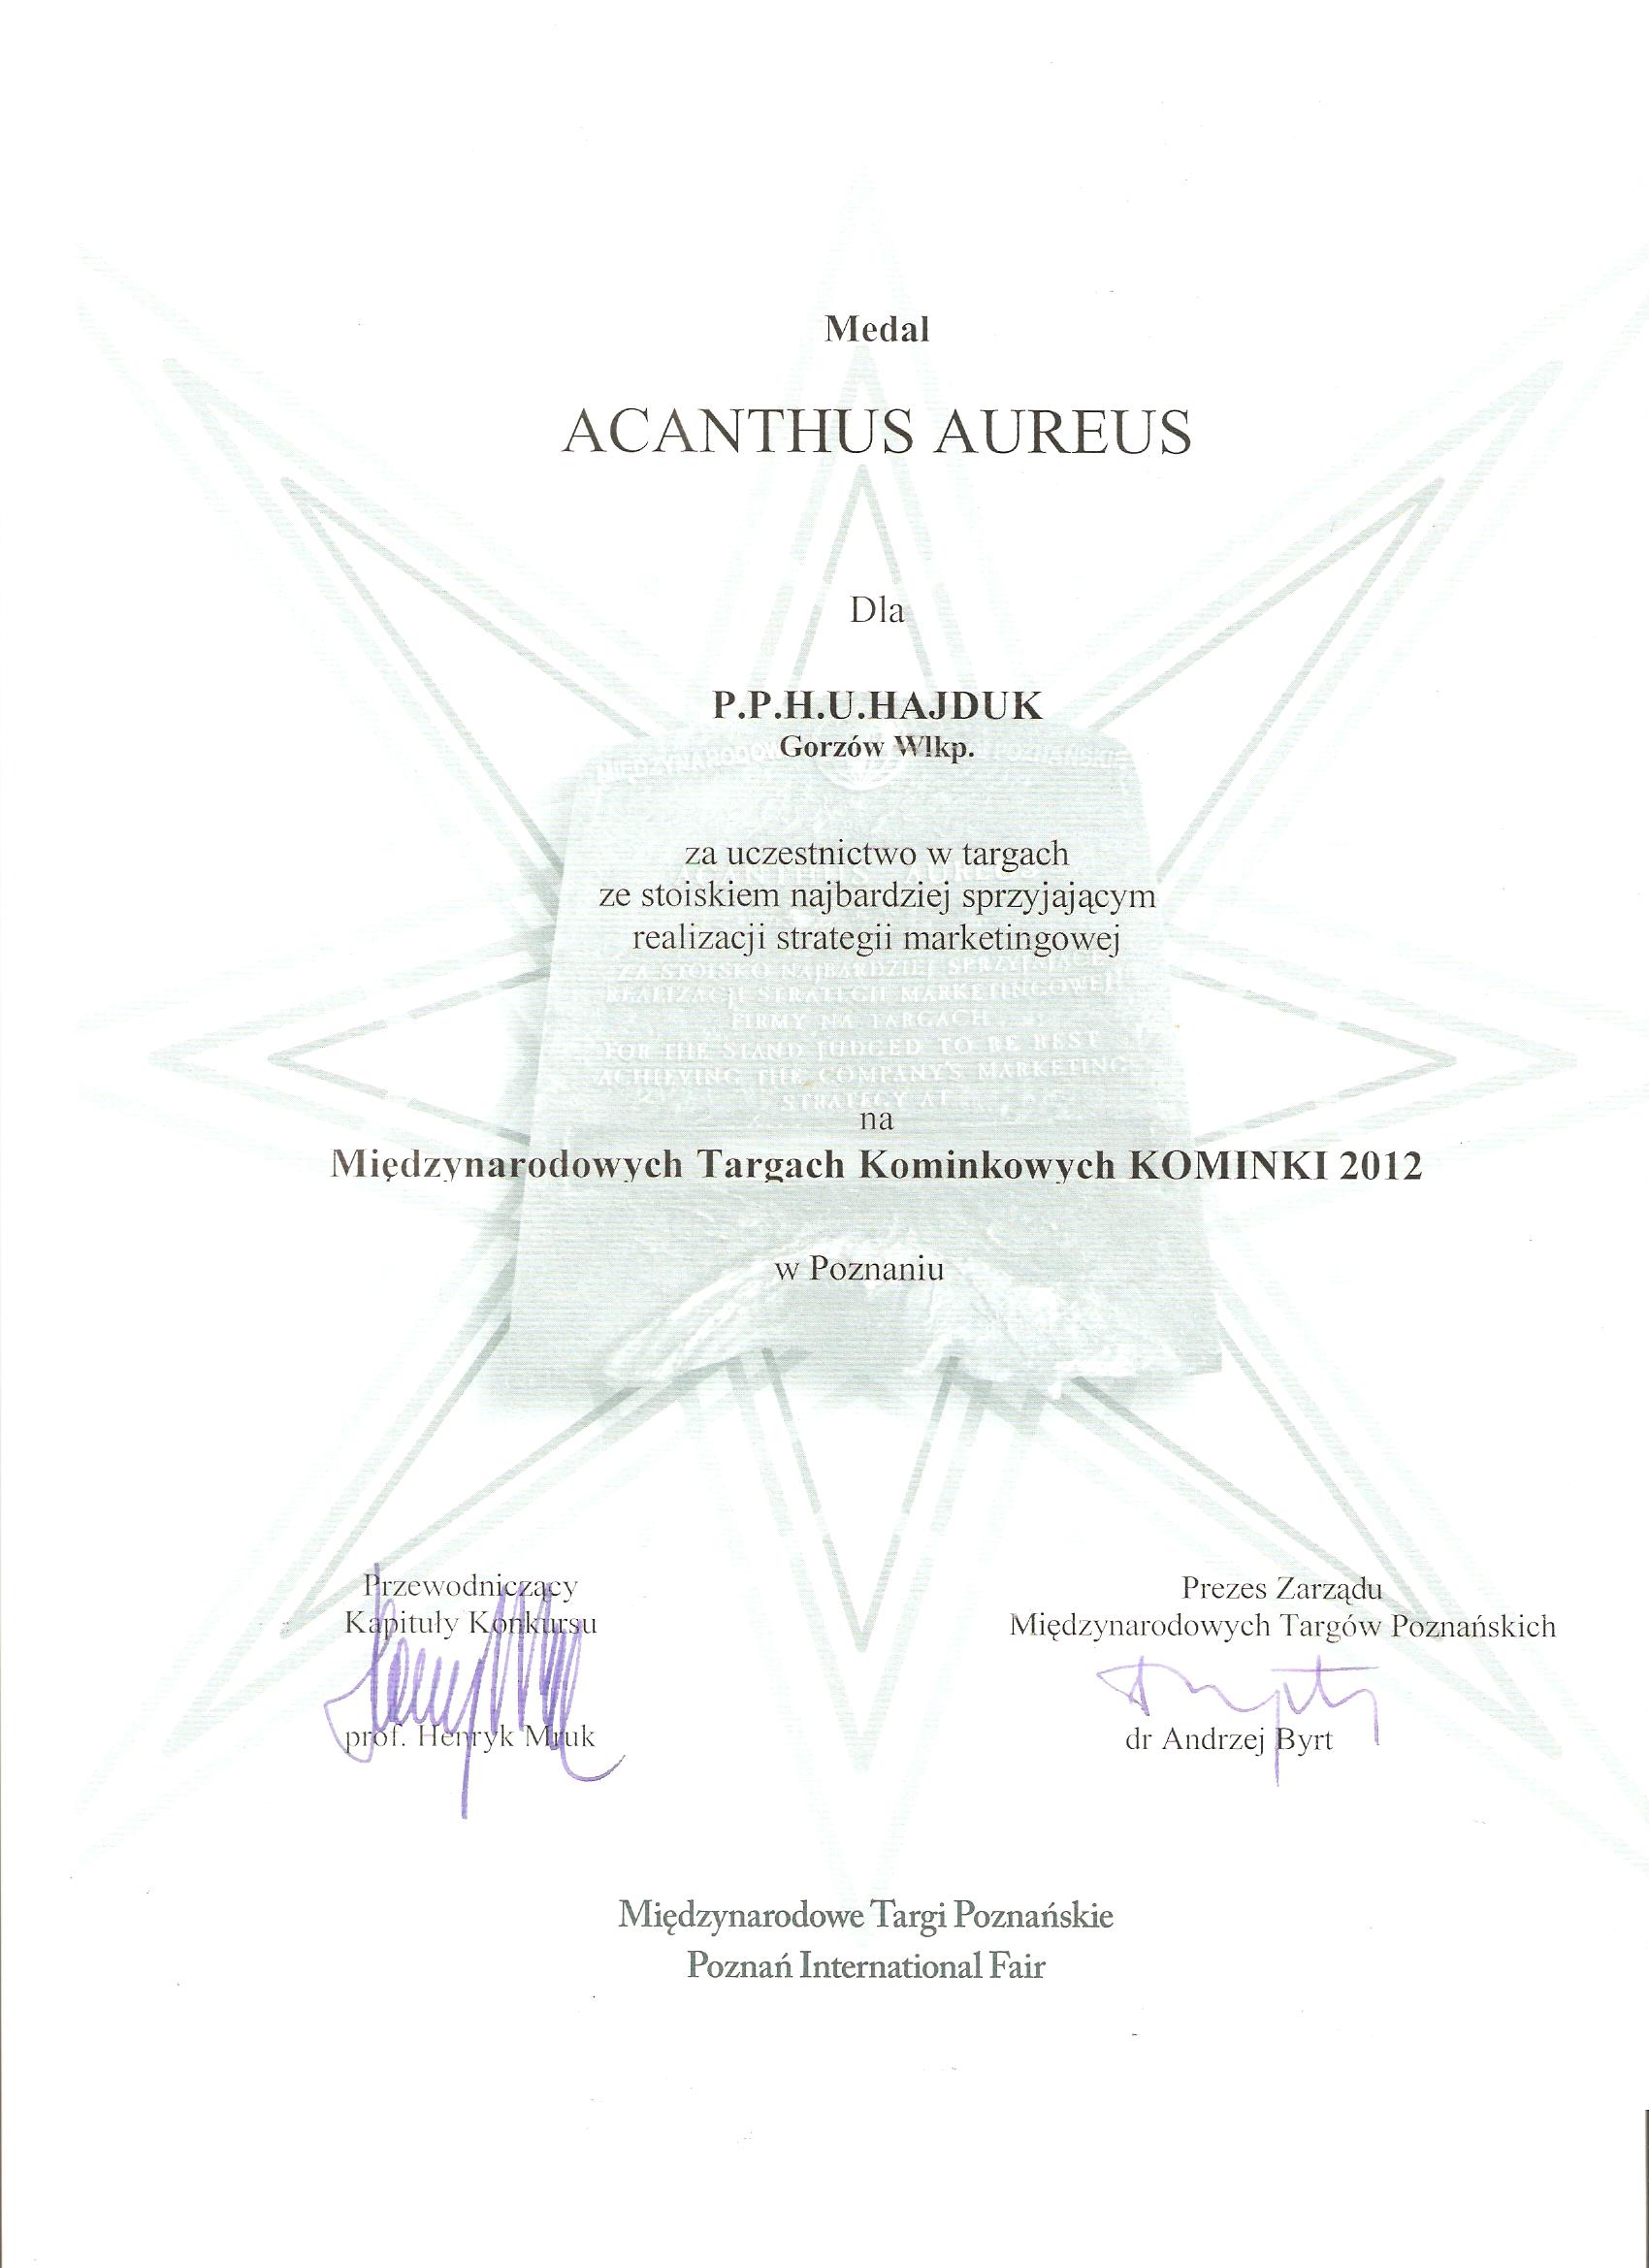 Dyplom Acanthus Aureus 2012